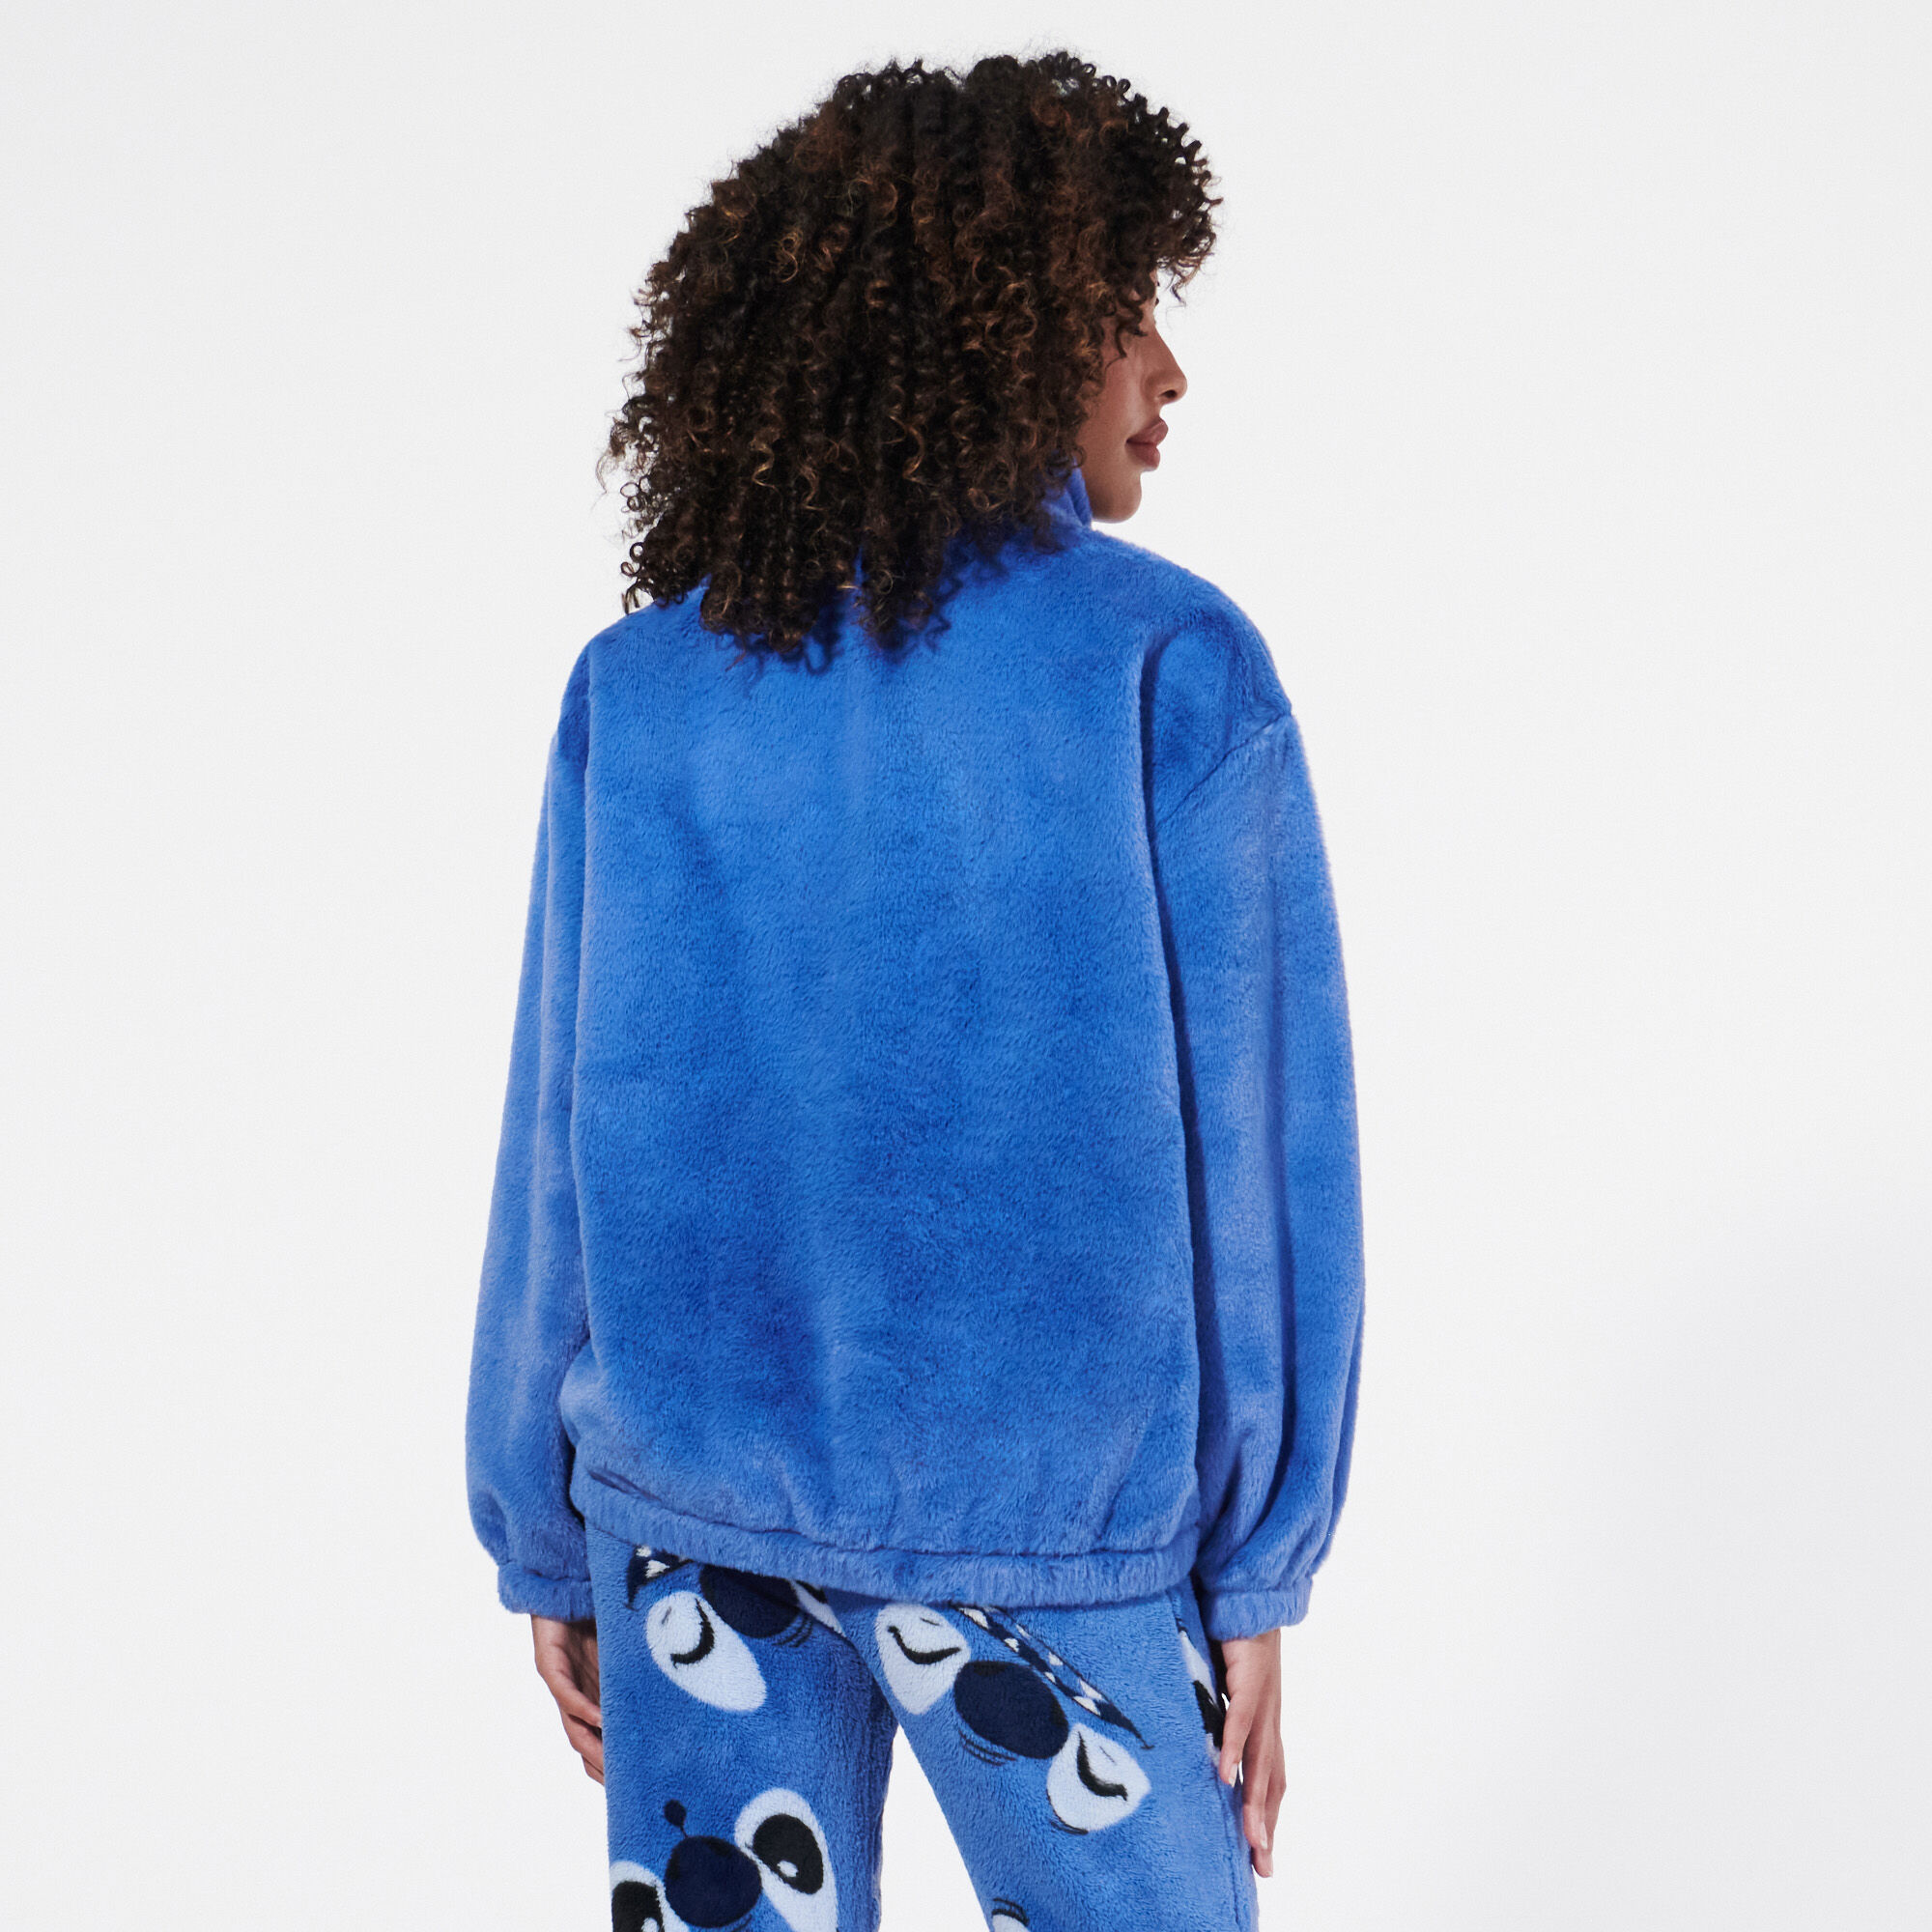 Stitch print cotton bra - blue - Undiz